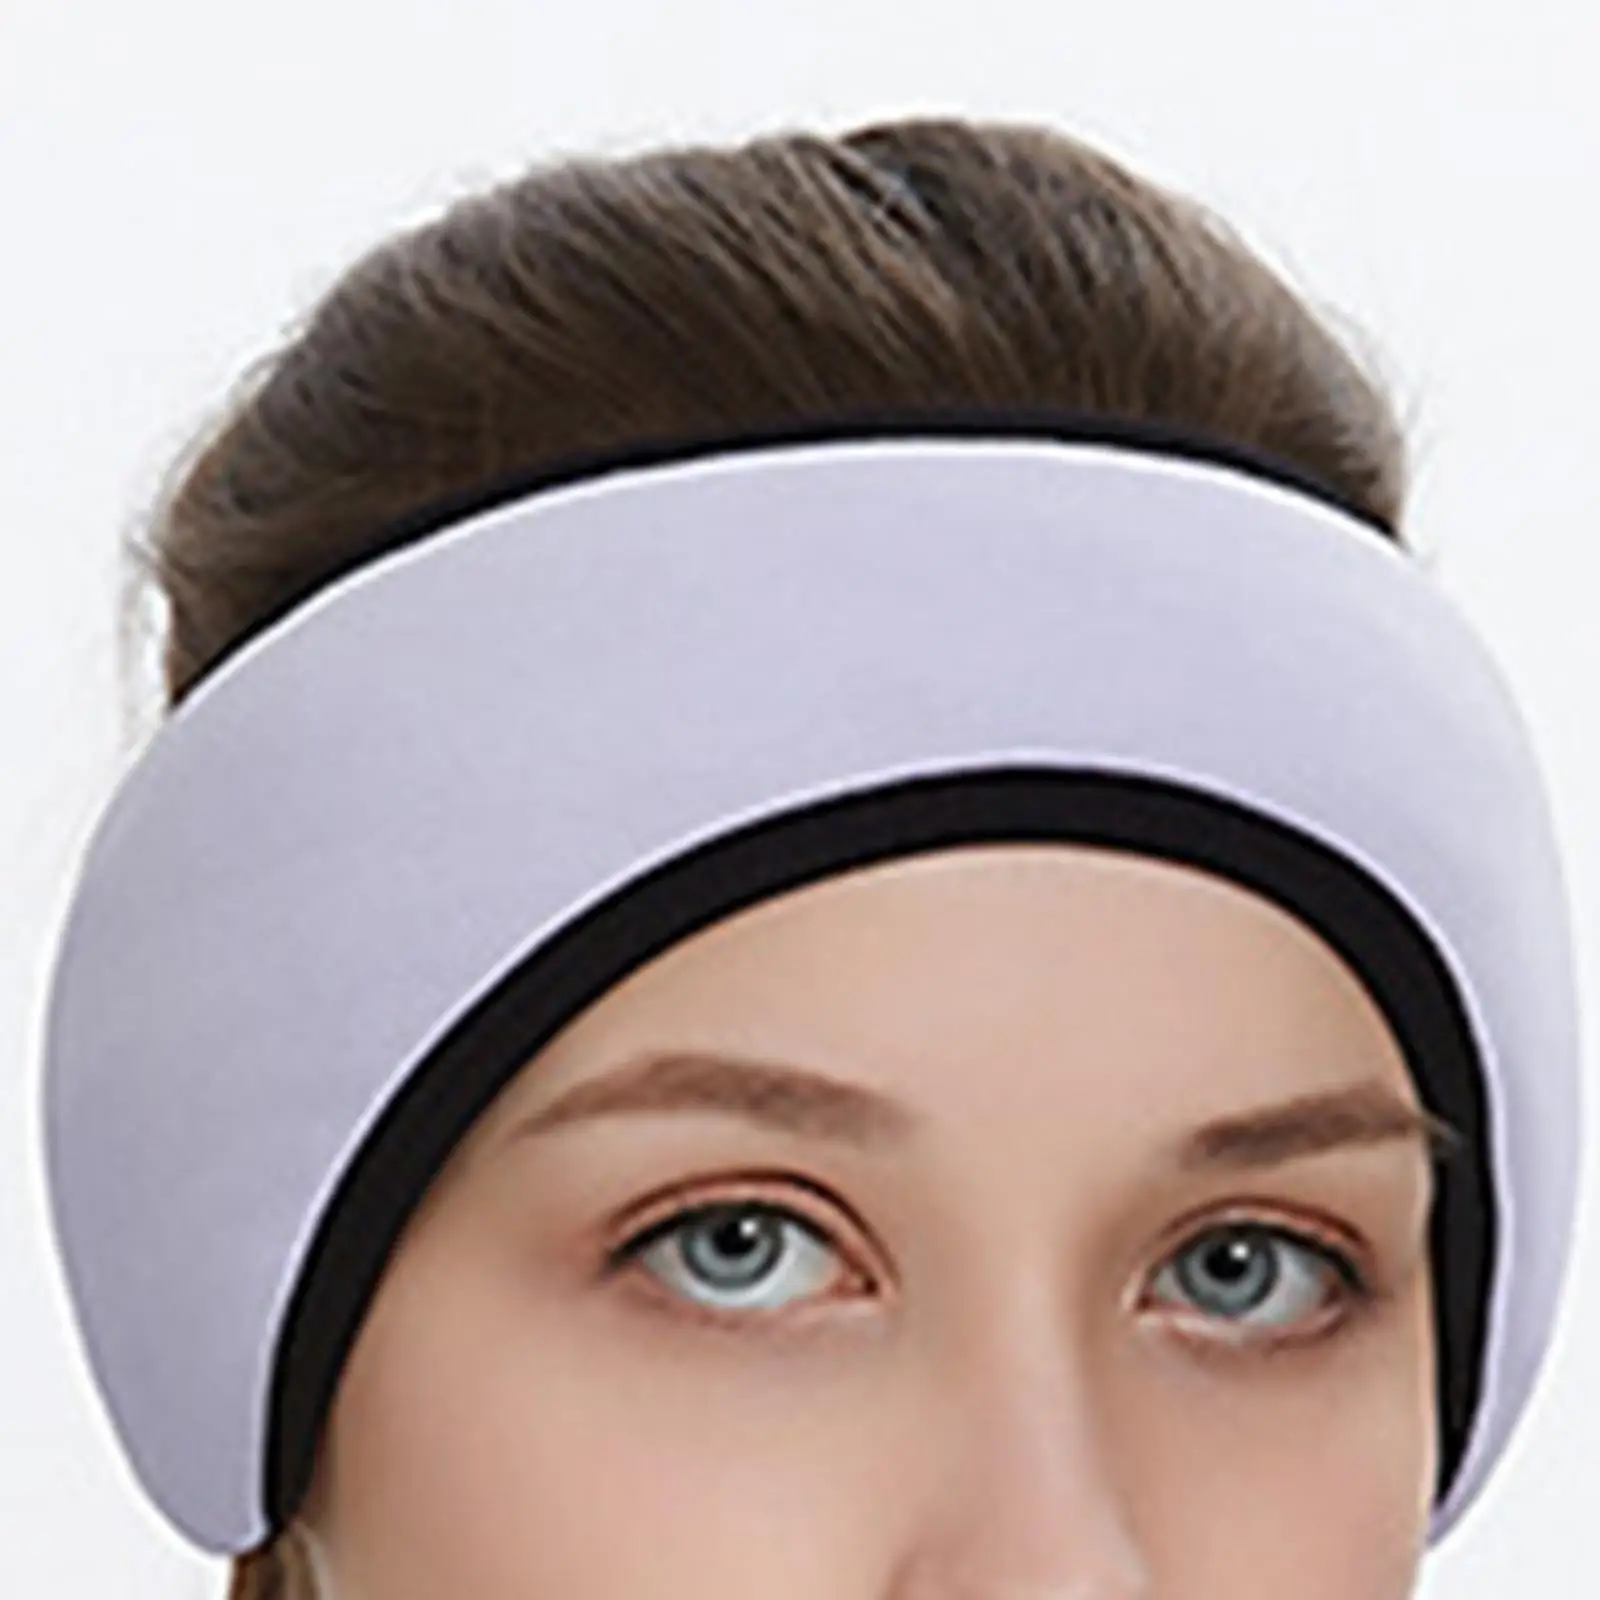 Ear Warmers Headband Comfortable Winter Earmuffs Ear Protector for Women Riding Skiing Camping Hiking Travelling